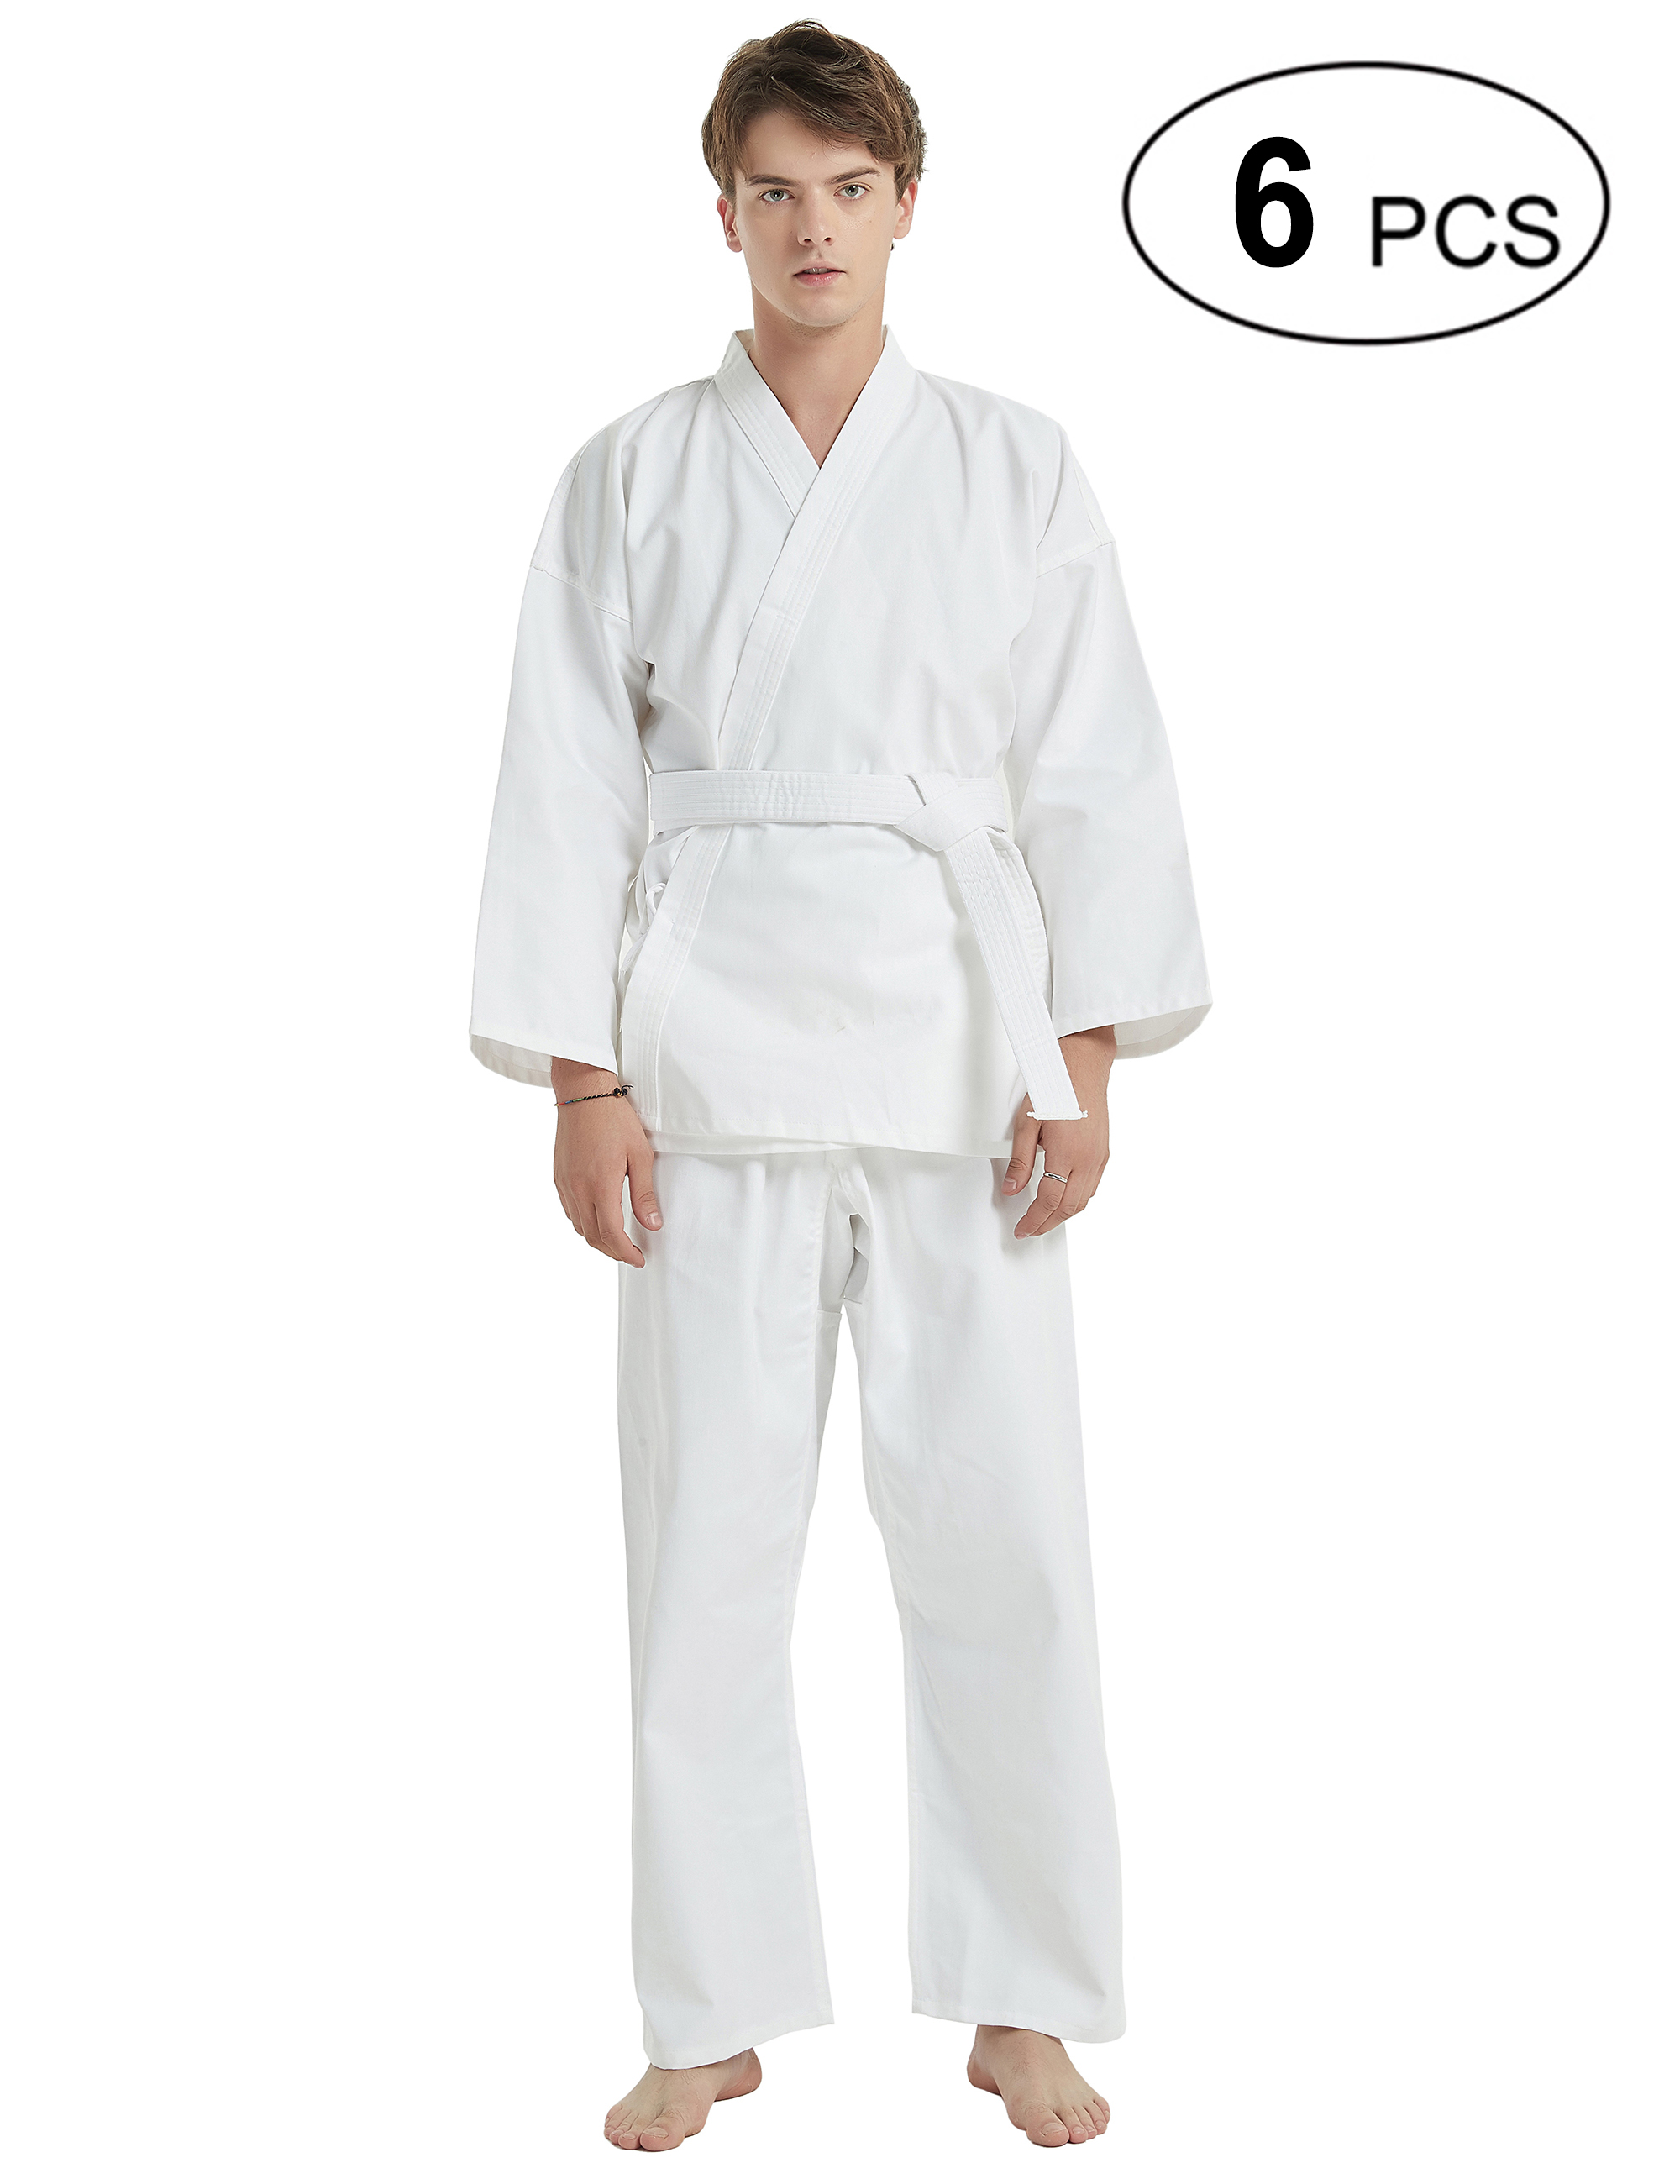 Polyester Cotton Blend Judo Taekwondo Suits for Kids Karate Suit Uniform Gi Kit with Belt by Athletics Gear Men /& Women Light Weight